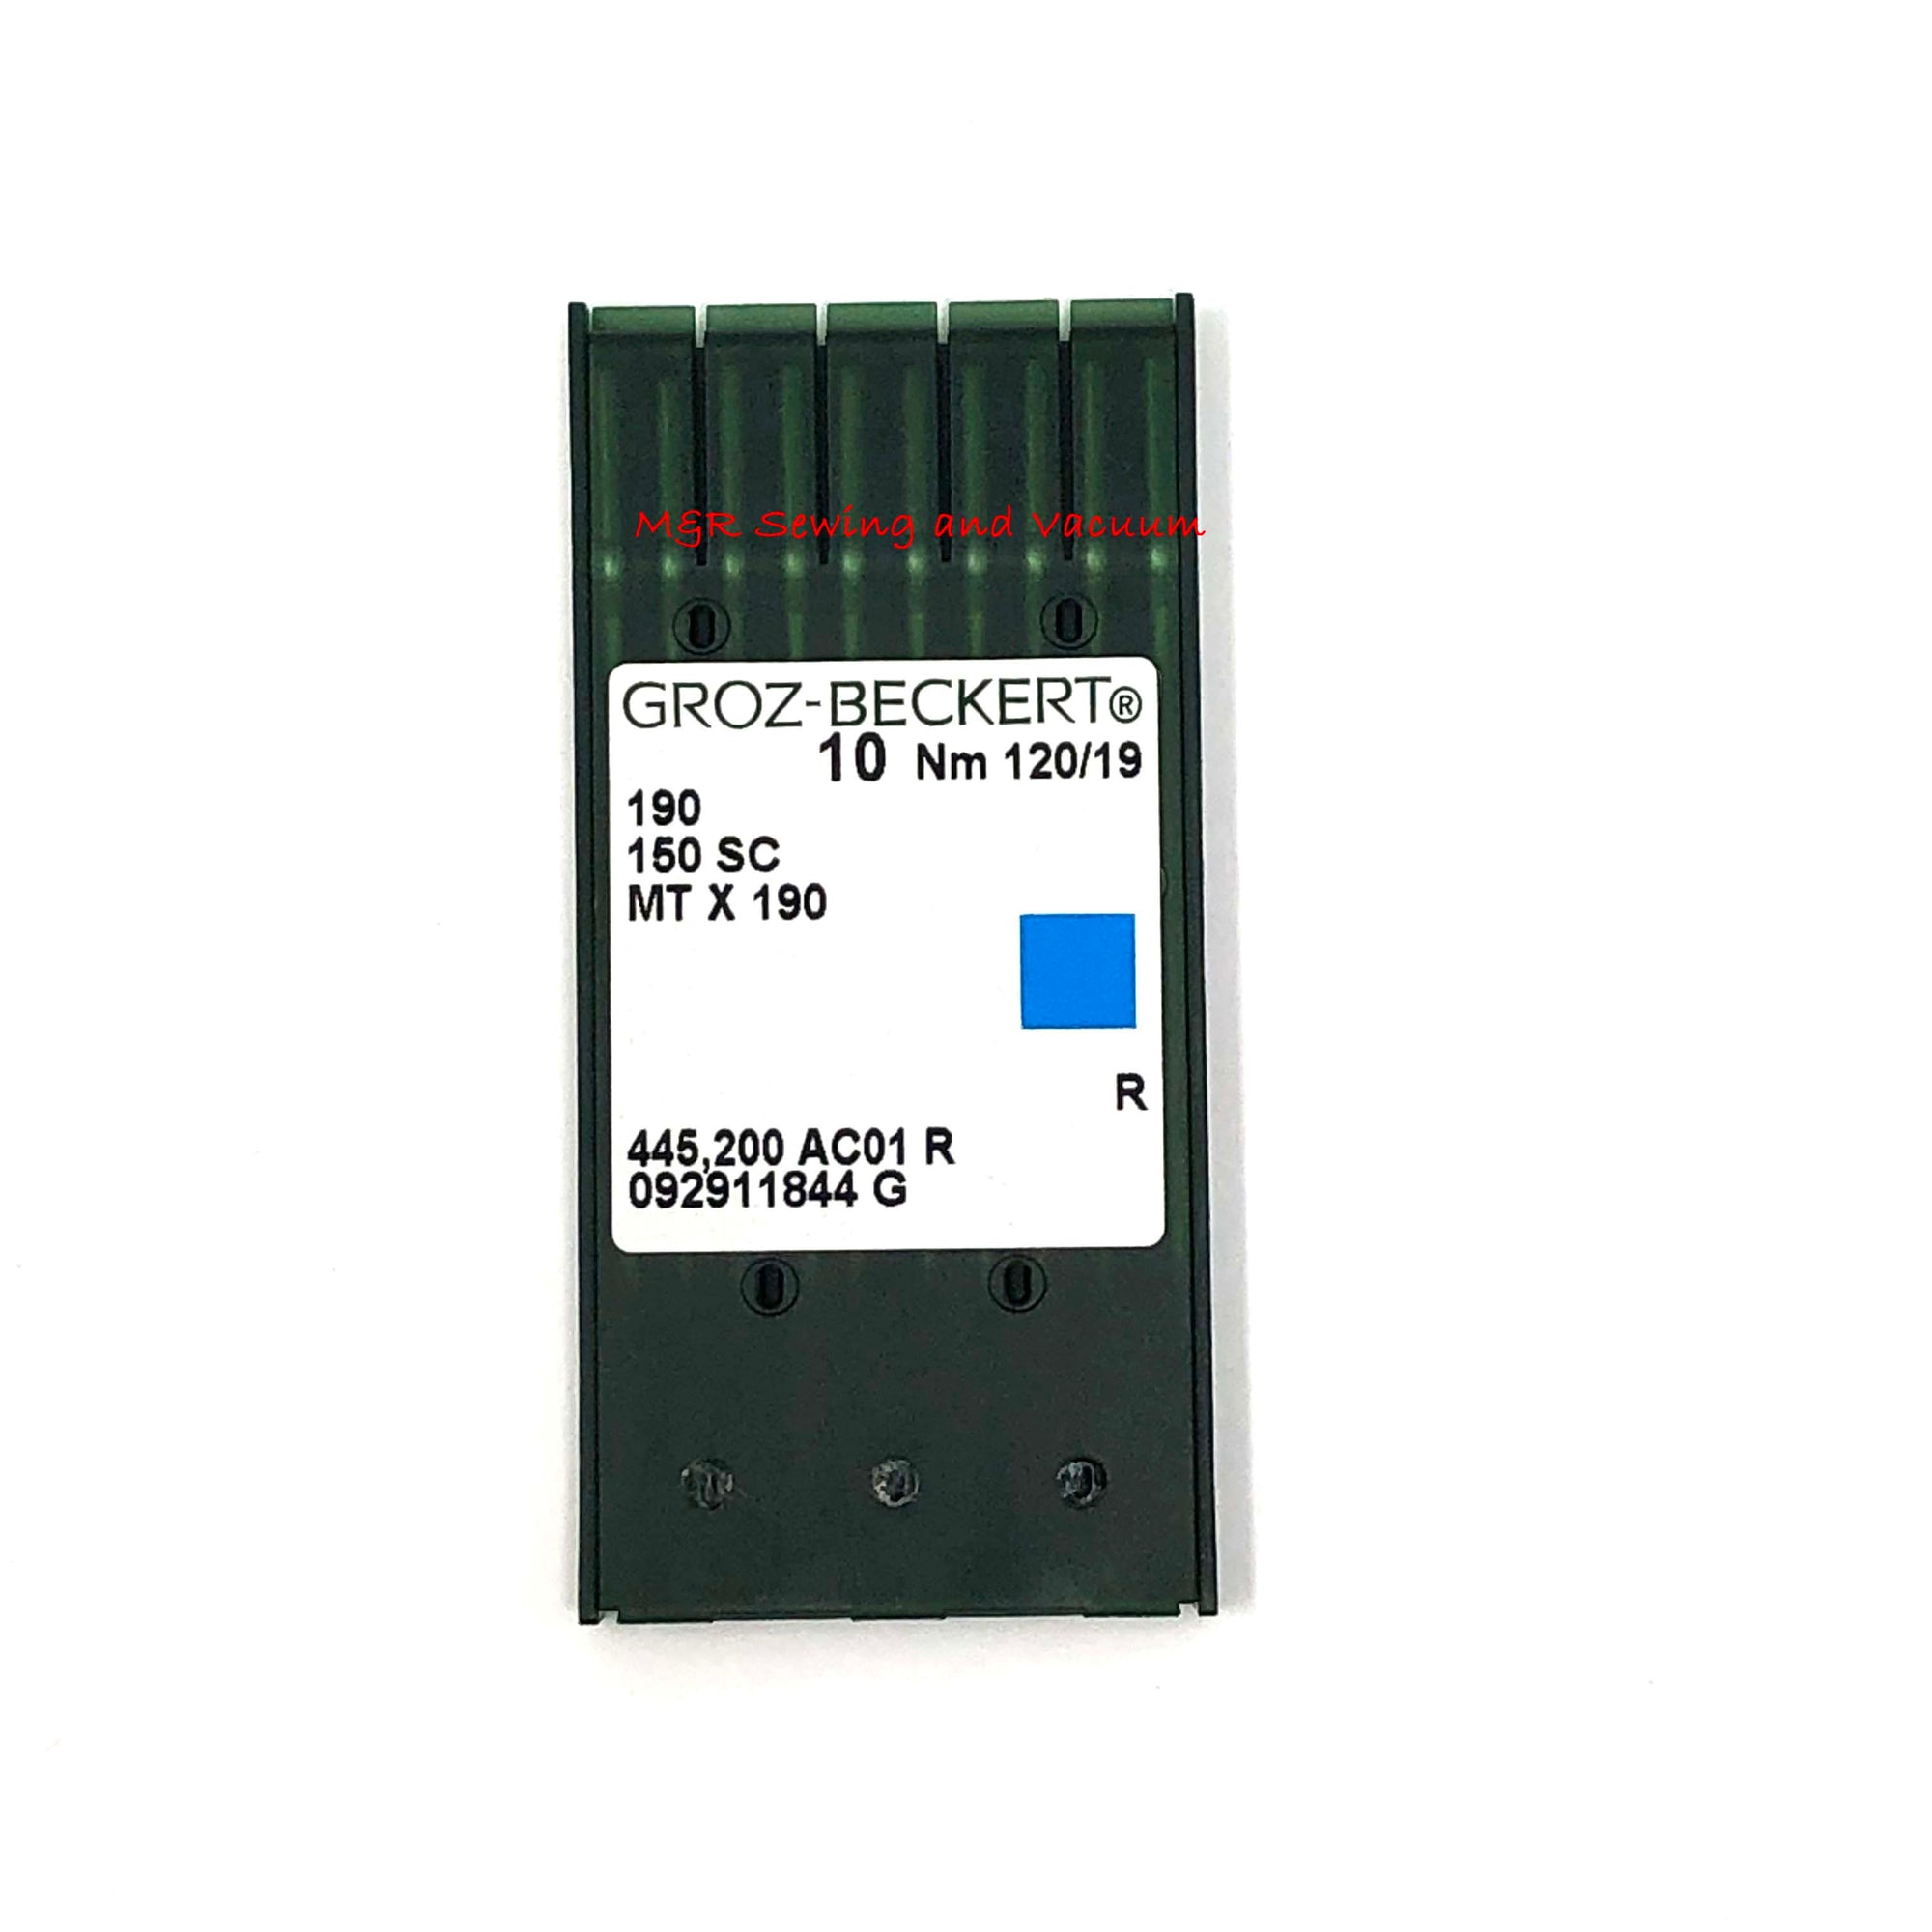 Groz-Beckert MTx190 Industrial Needles - 120/19